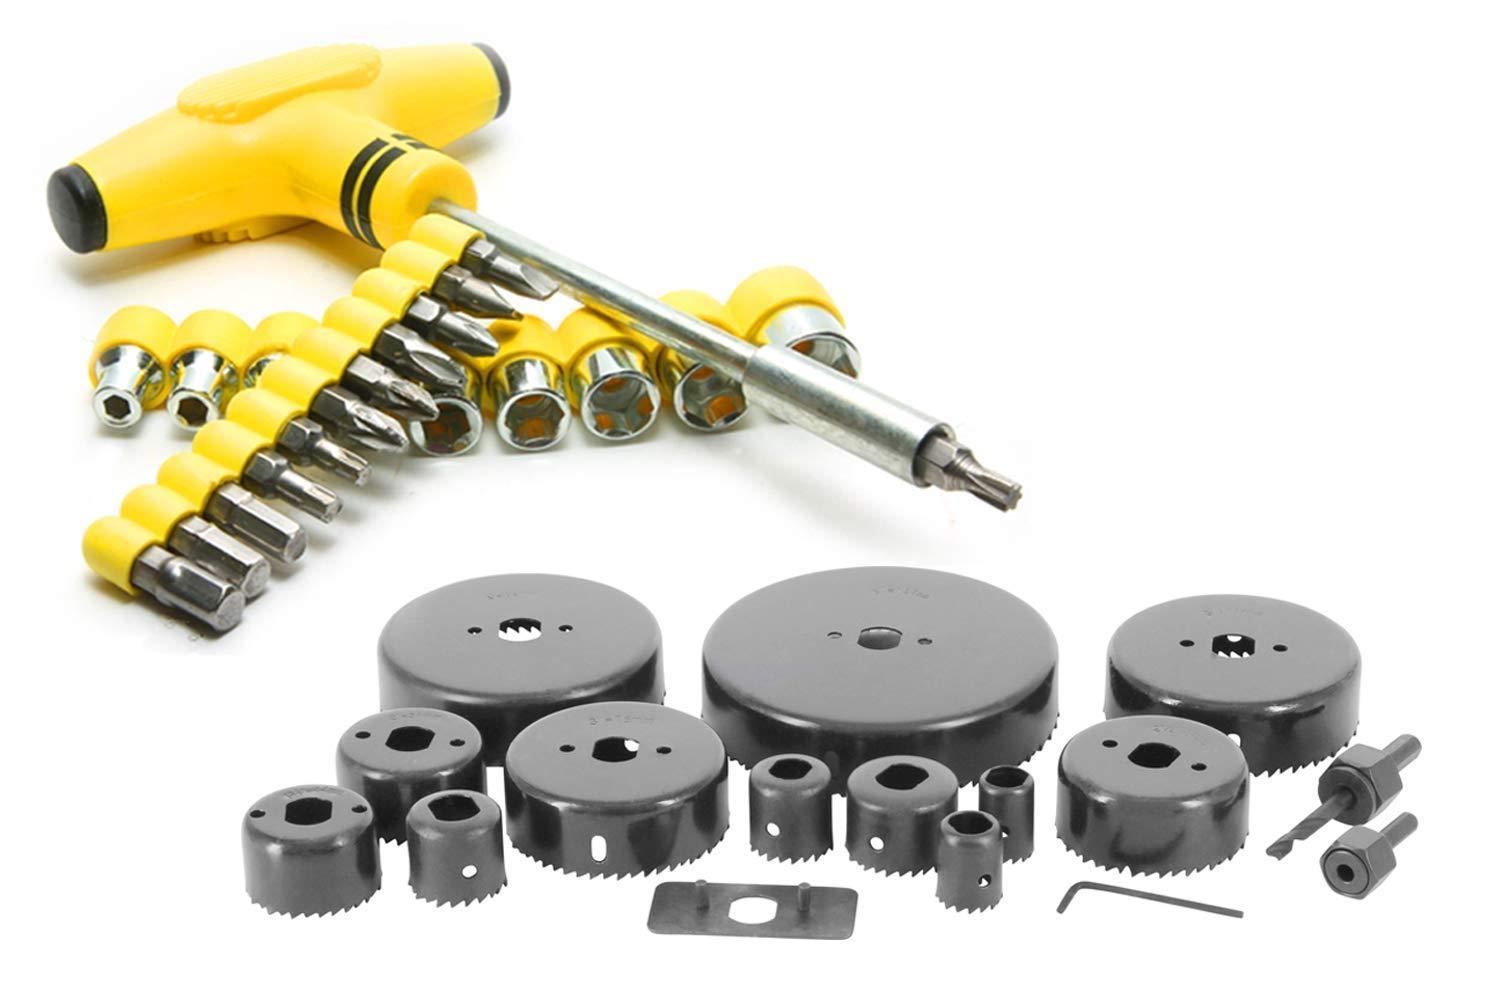 Professional Tools- 16 pcs Heavy Duty Hole Saw Cutter Set Cutting Tool with 24 pcs Tspanner Socket Set